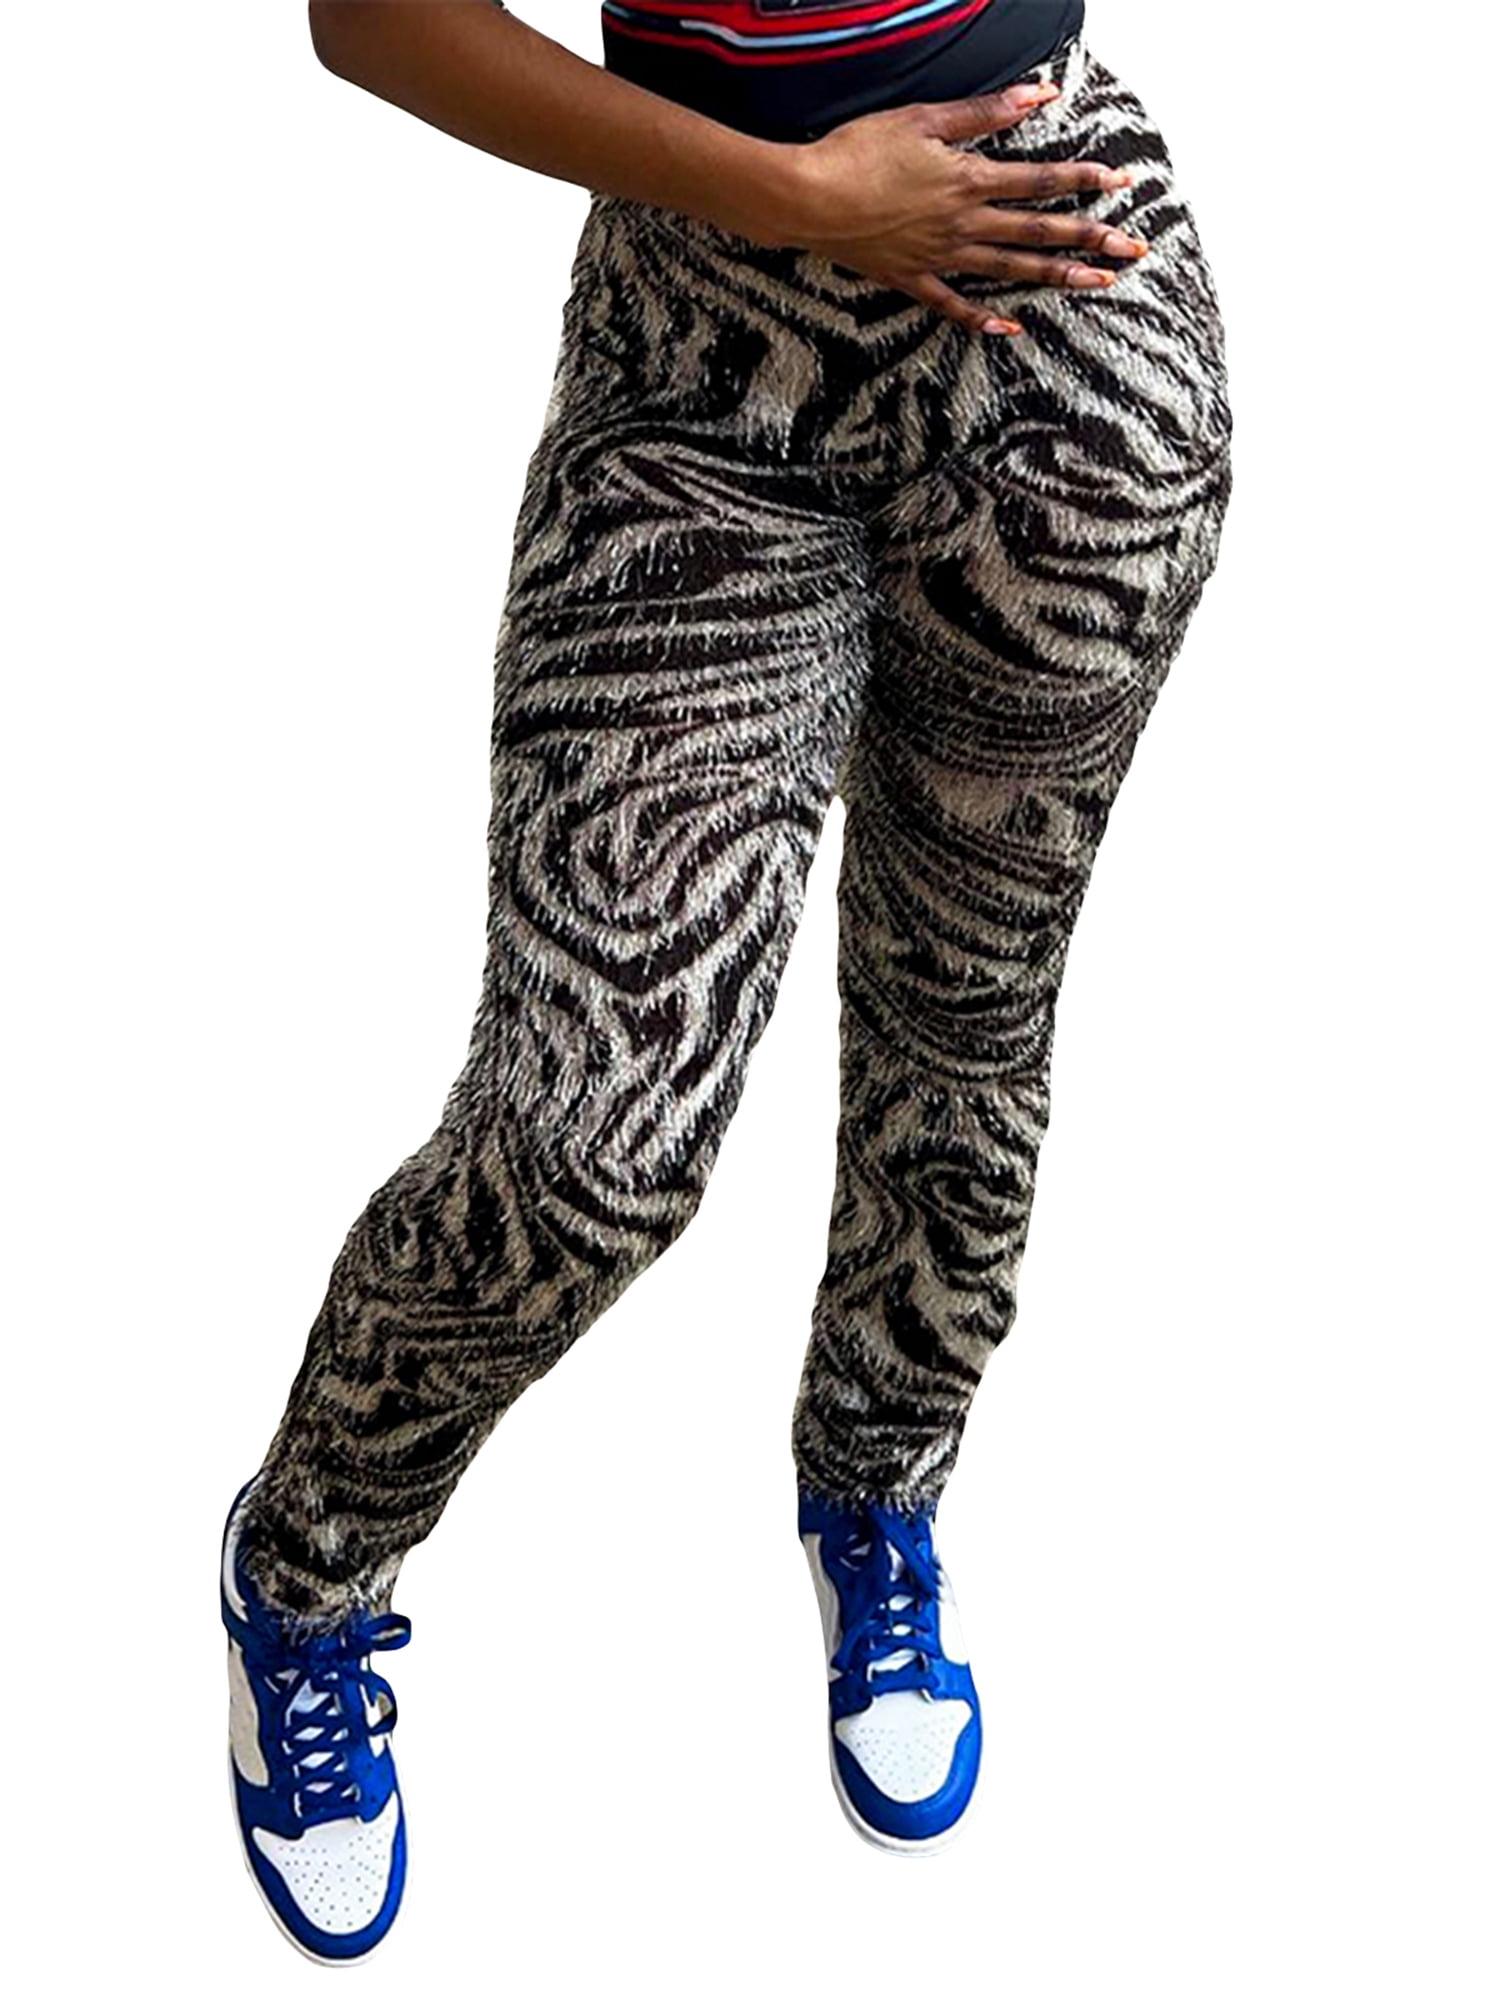 Luethbiezx Fashionable Women's Zebra Print Mid-Rise Pants with Fuzzy  Leggings, Streetwear Style 